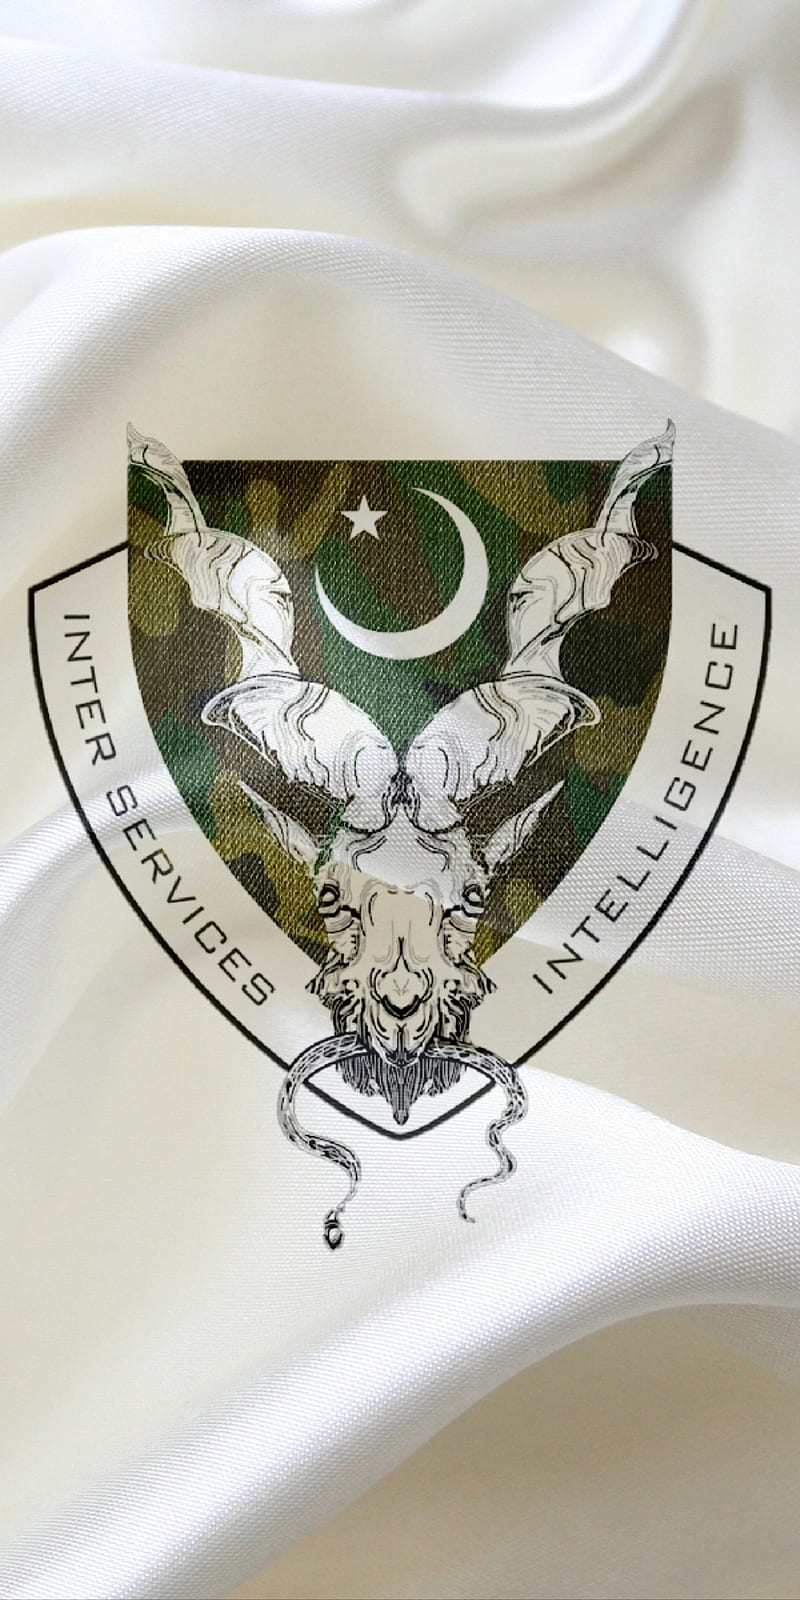 Intelligence ISI Pakistan Wallpaper, Pak Army Wallpaper, 44% OFF